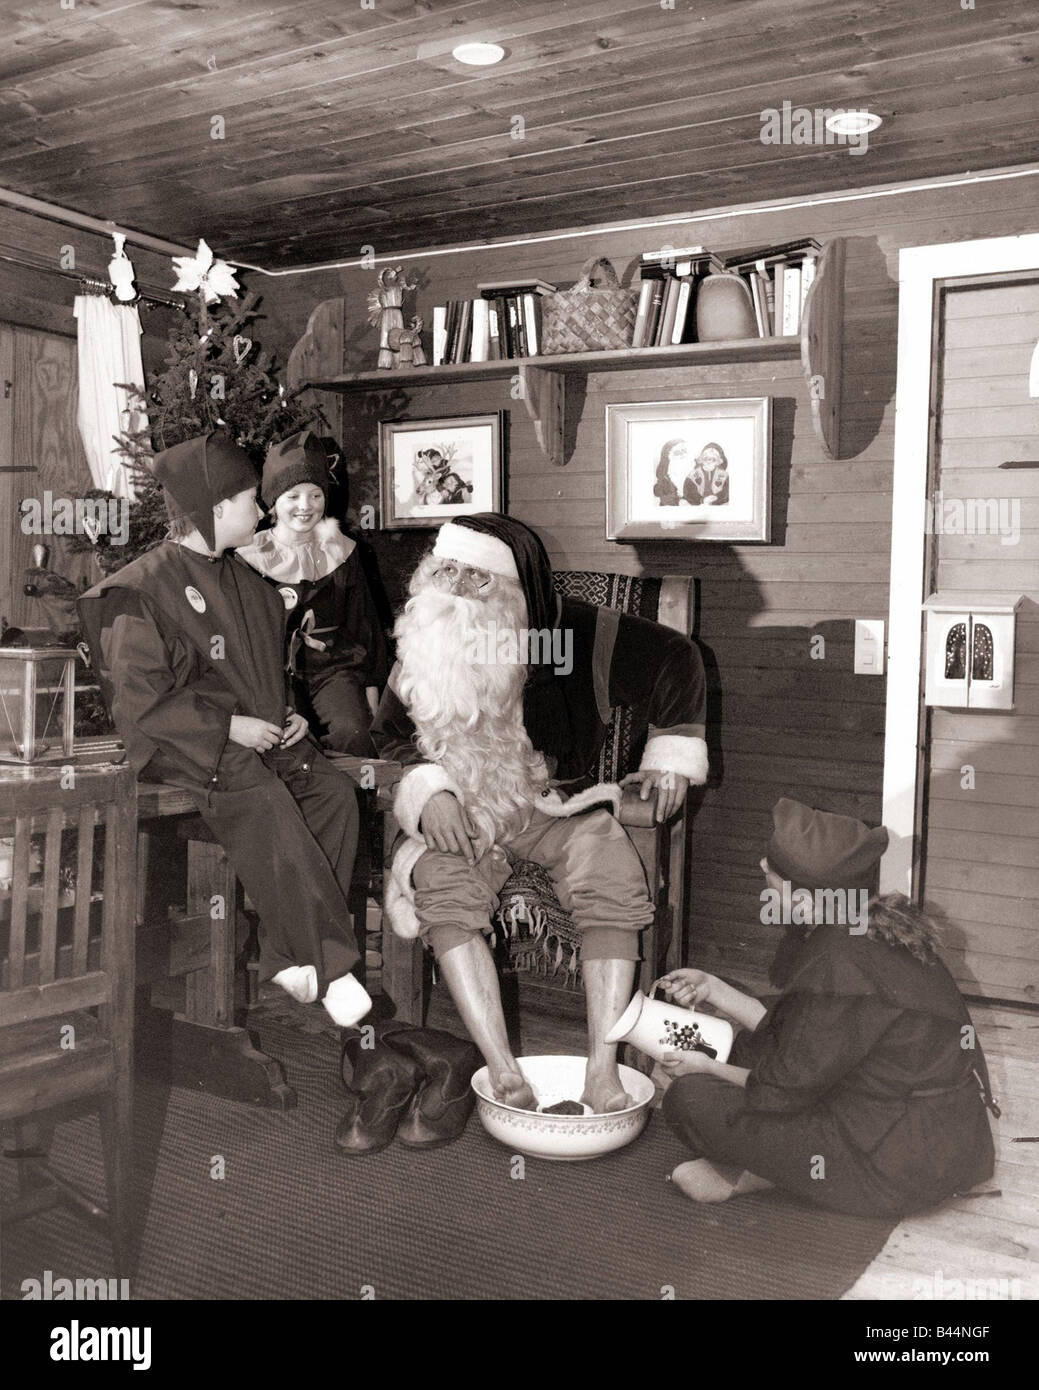 Vater Weihnachten Dezember 1991 Vater Weihnachtsmann Xmas Weihnachten 1990 Mirrorpix lokale Beschriftung Christmasgreetings Stockfoto